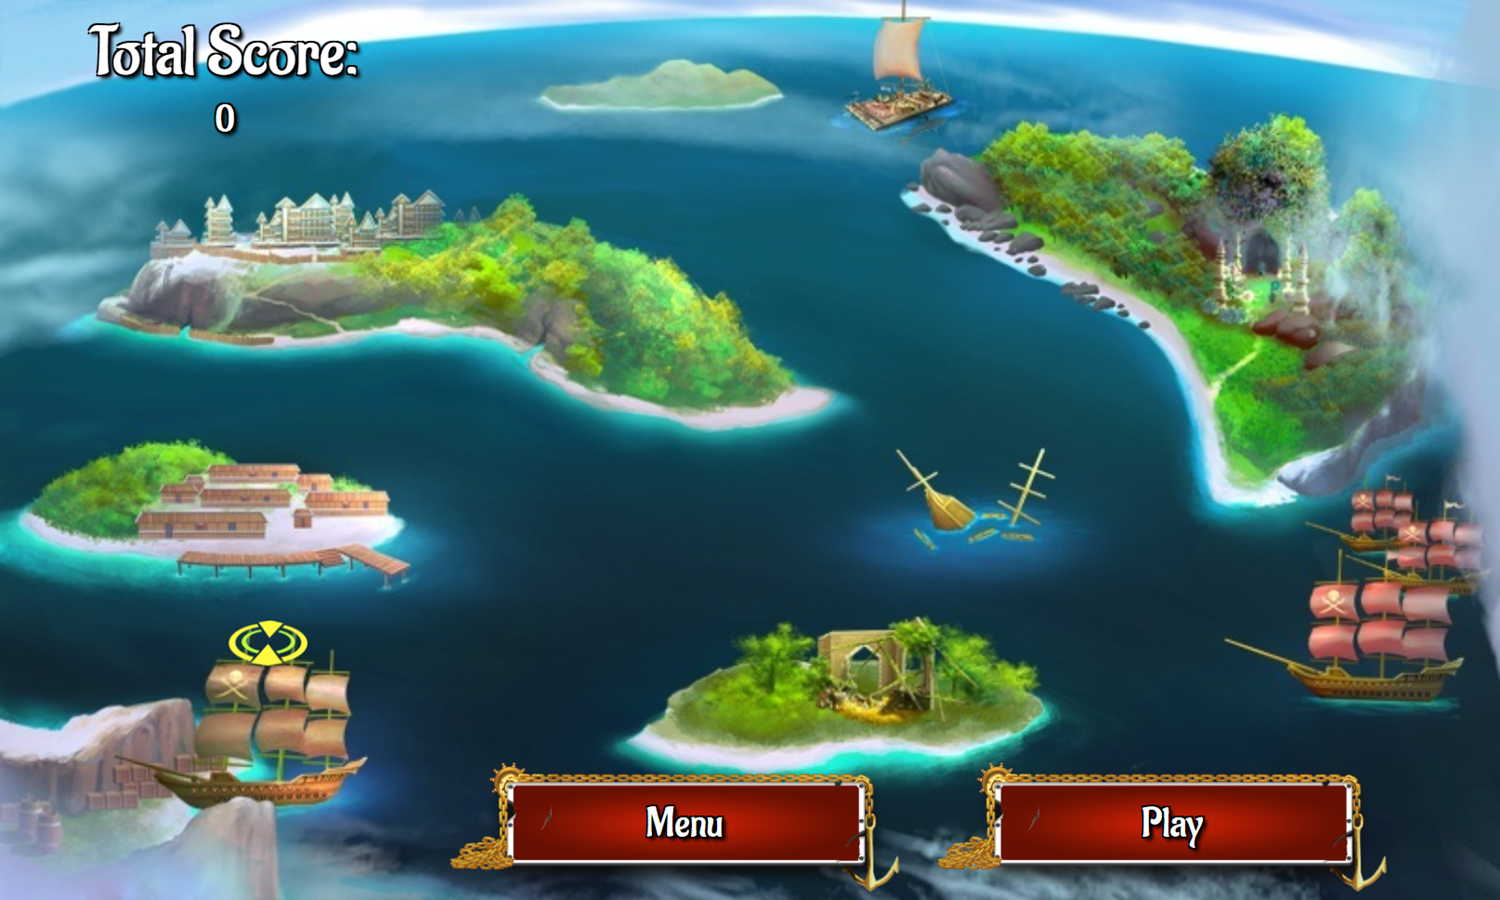 Pirates and Treasures Game Level Select Screenshot.